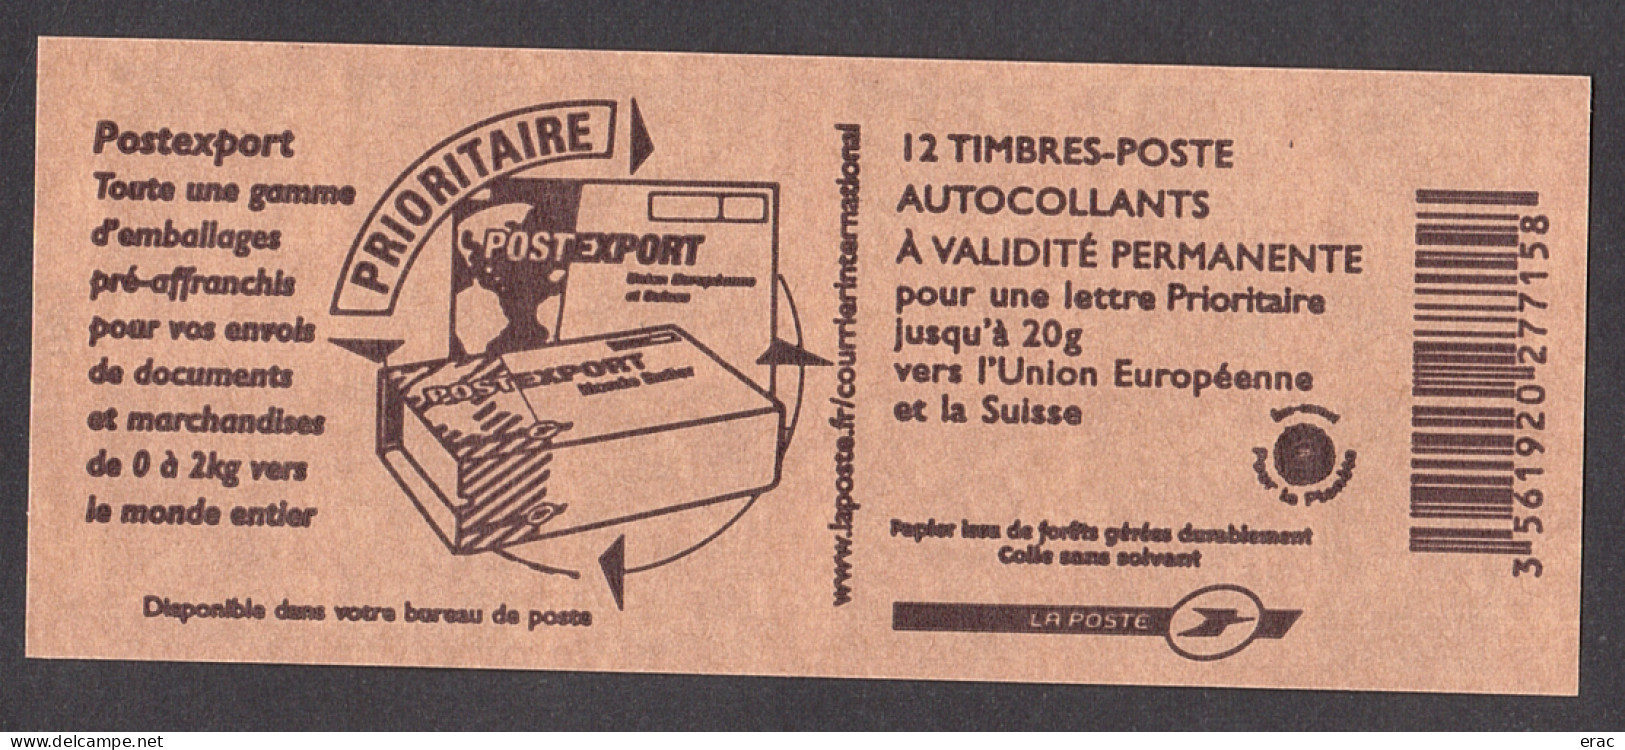 France - Carnet 4127-C1 - Neuf ** - N° De Liasse - Marianne De Lamouche - Postexport - Markenheftchen